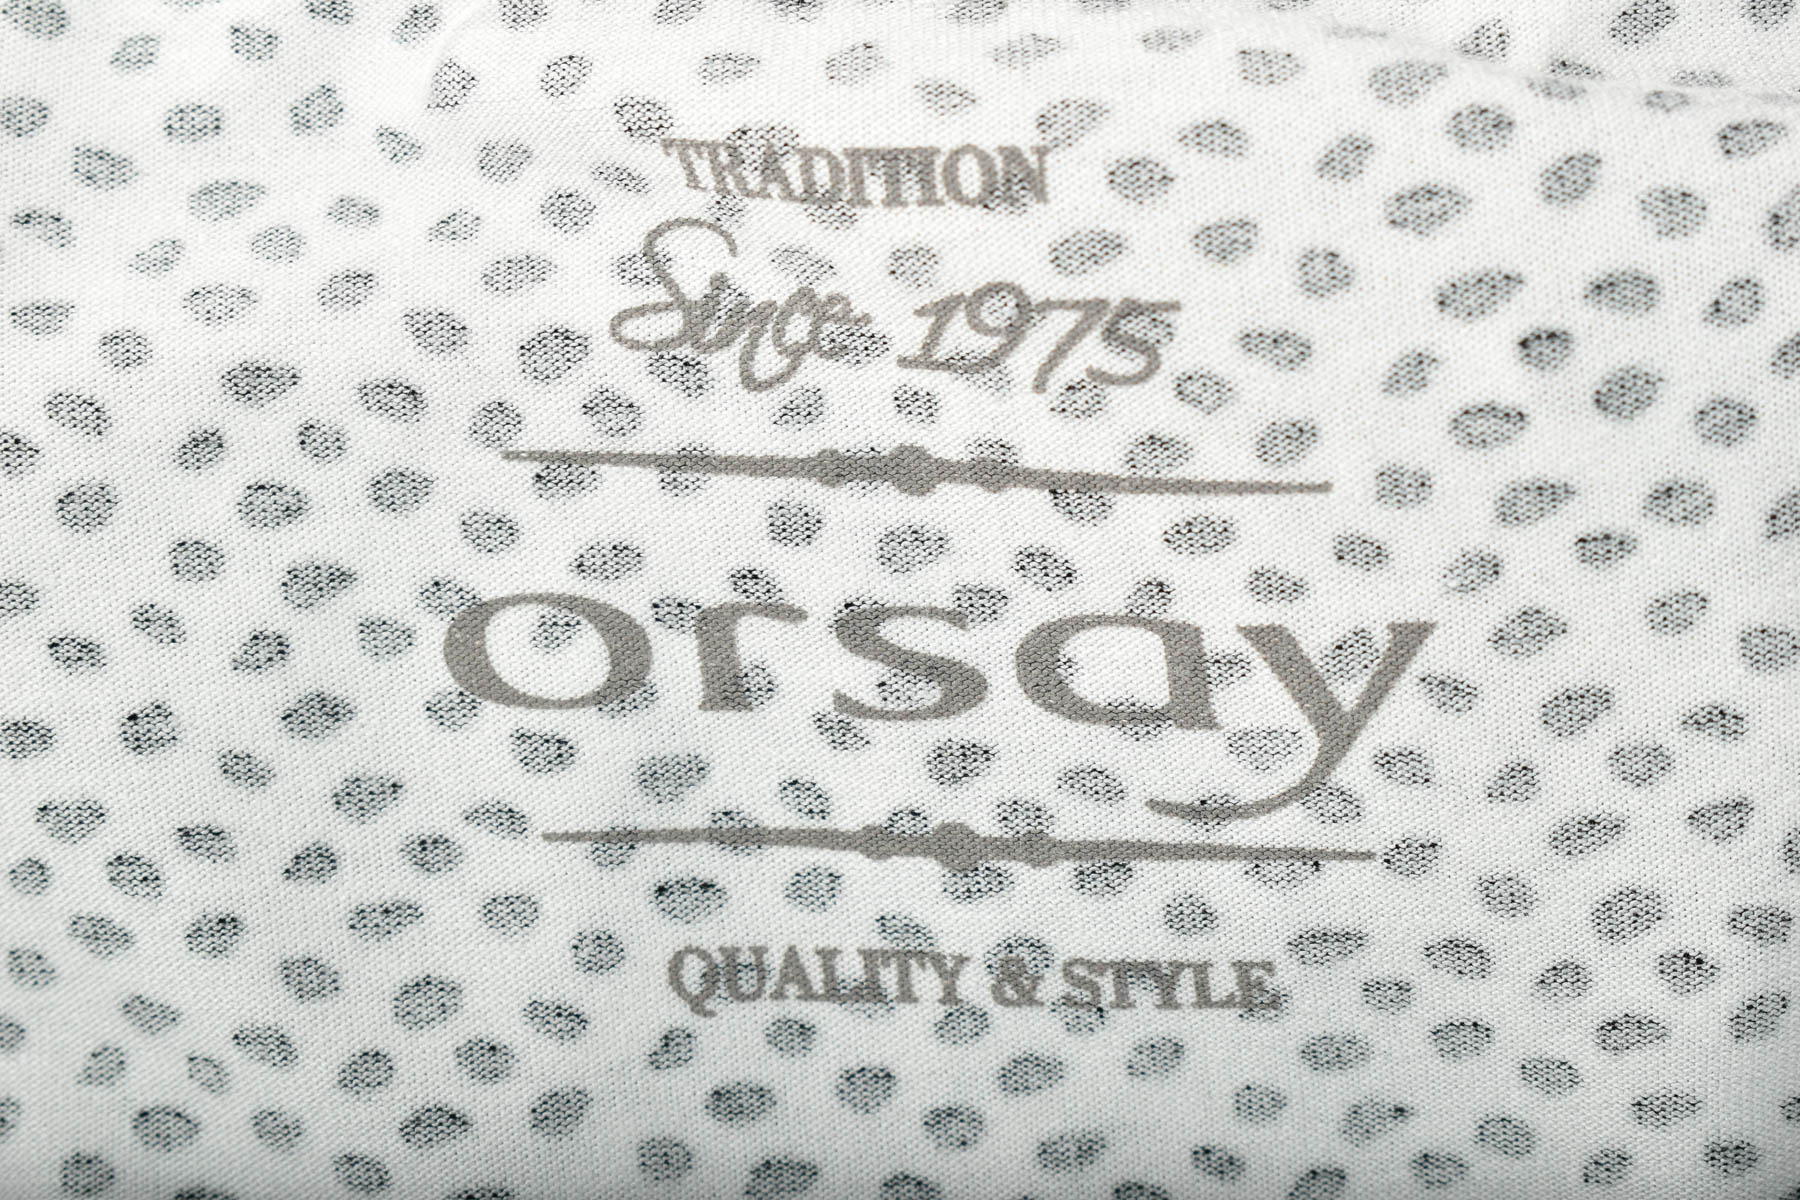 Women's t-shirt - Orsay - 2